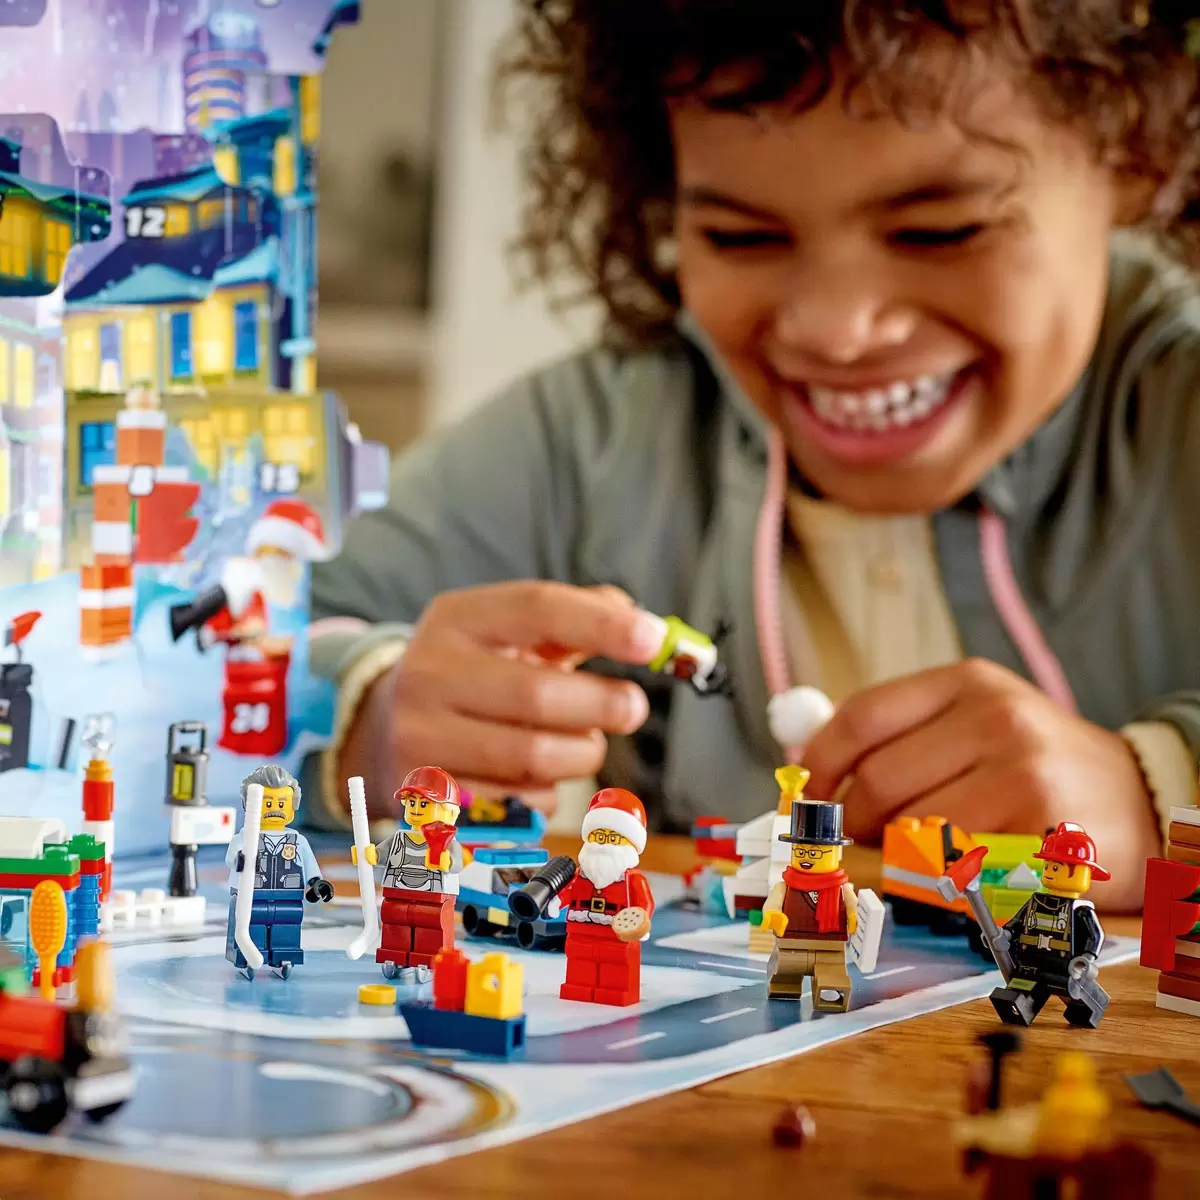 Buy LEGO City Advent Calendar Lifestyle Image at Costco.co.uk